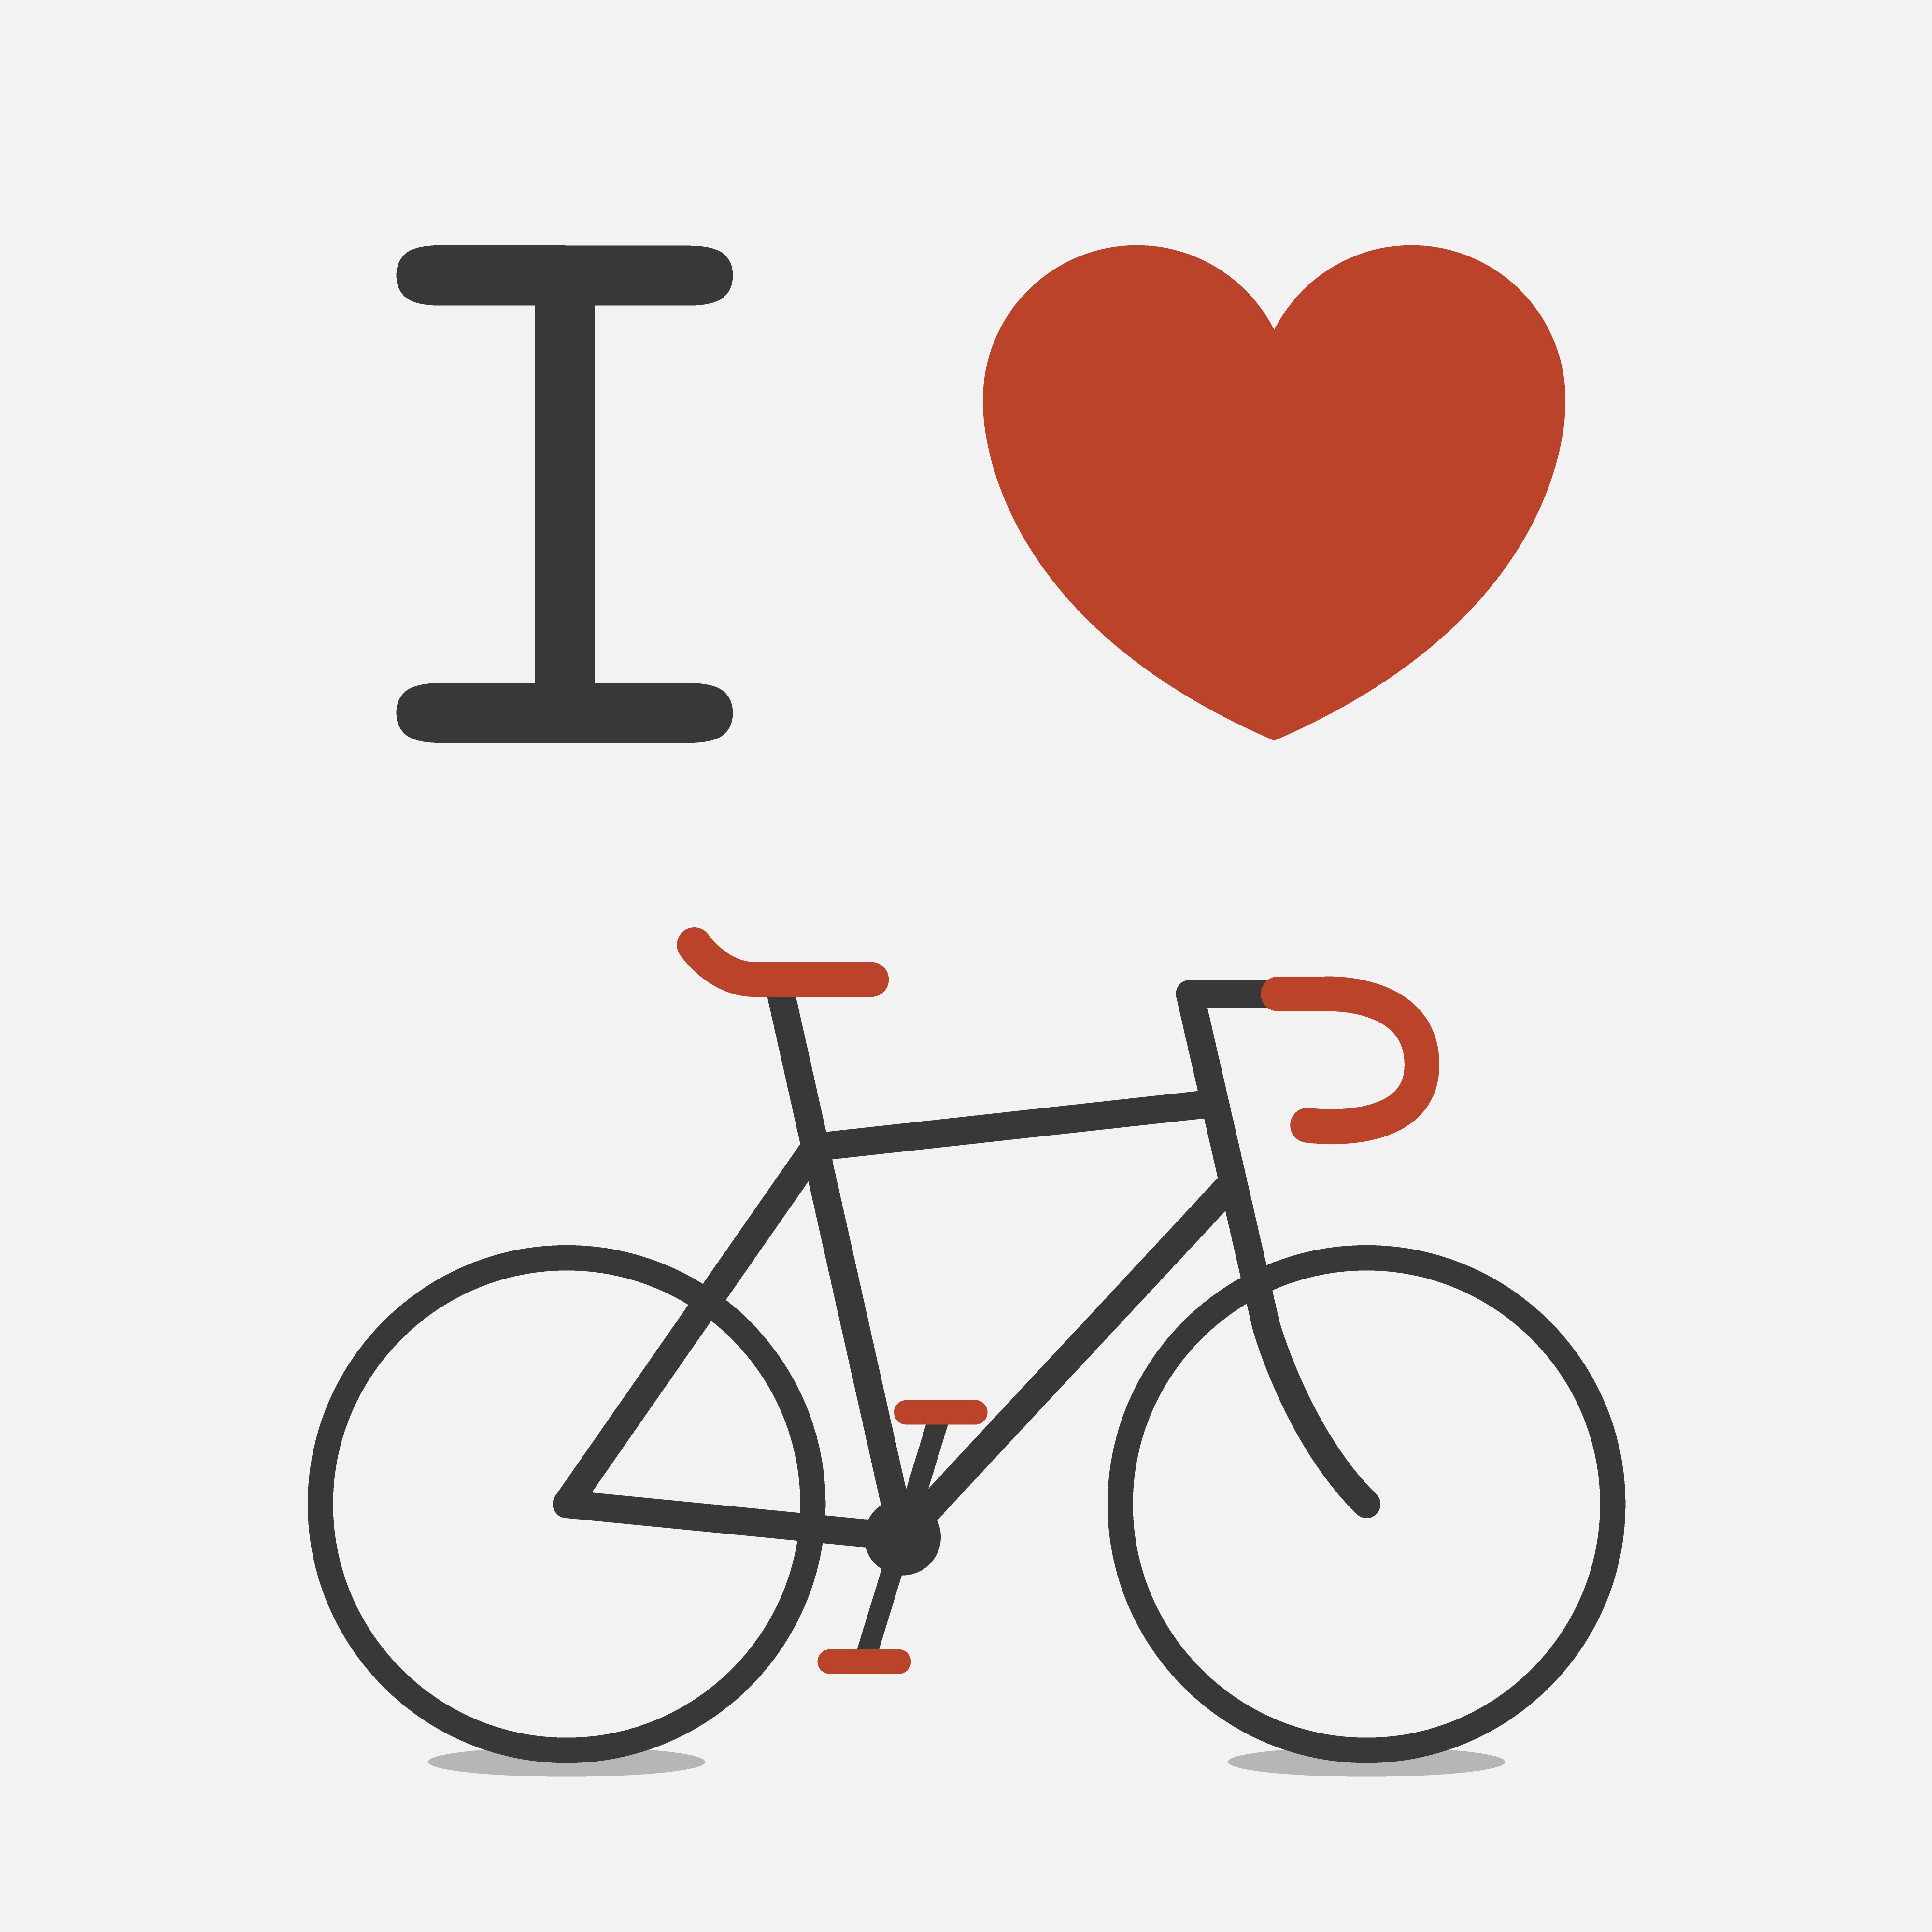 This bike is mine. Velo надпись. I Love велосипед. Я люблю велосипед. Надписи на велосипед.